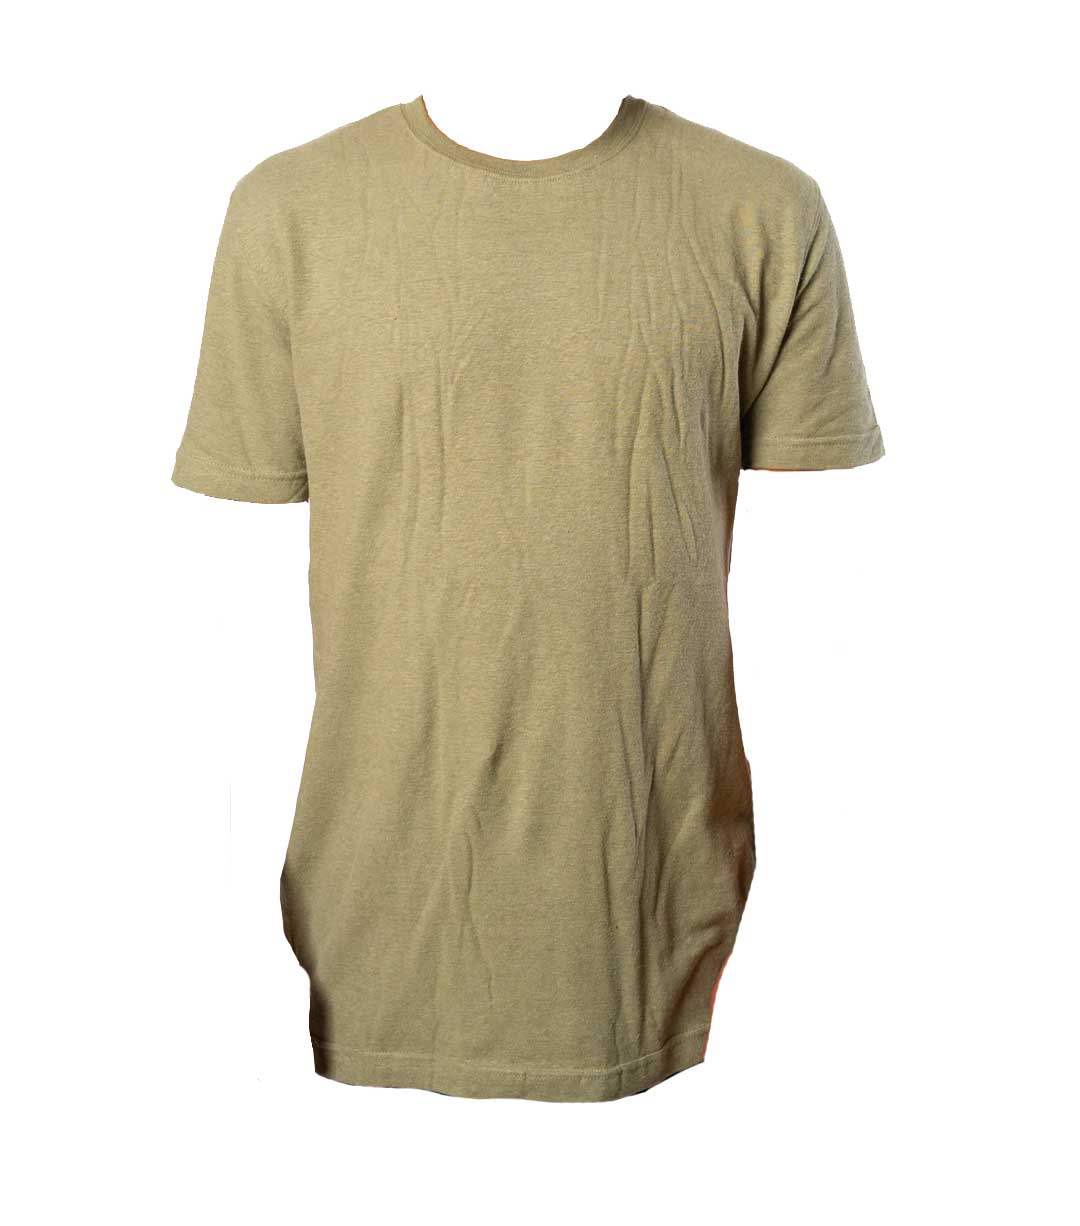 Blank Hemp T shirt Unisex – Sand Light Brown